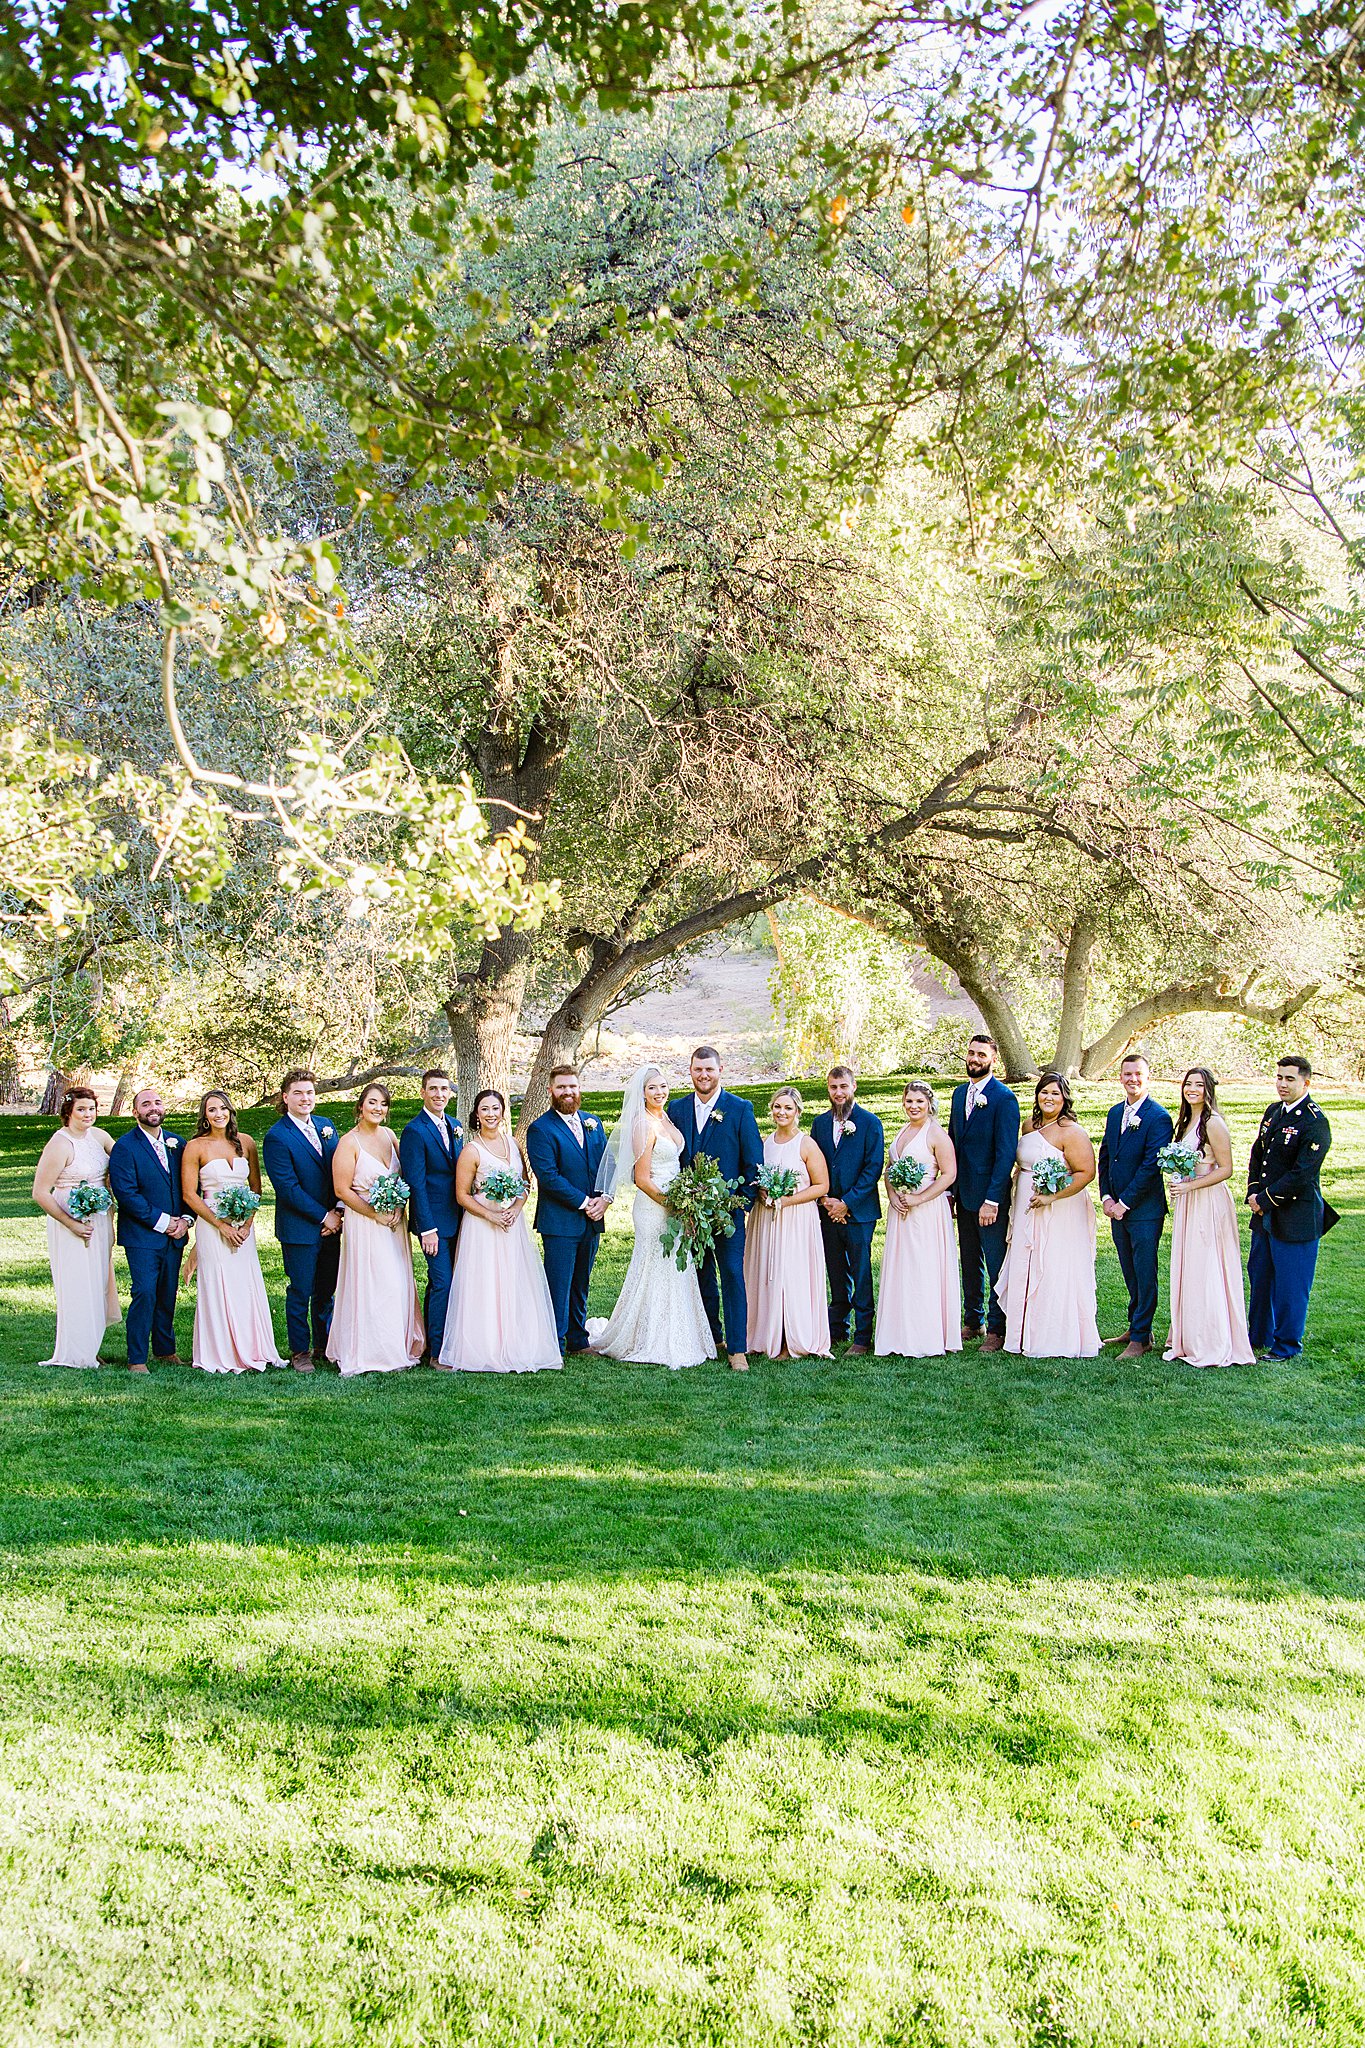 Bridal party together at a Van Dickson Ranch wedding by Arizona wedding photographer PMA Photography.